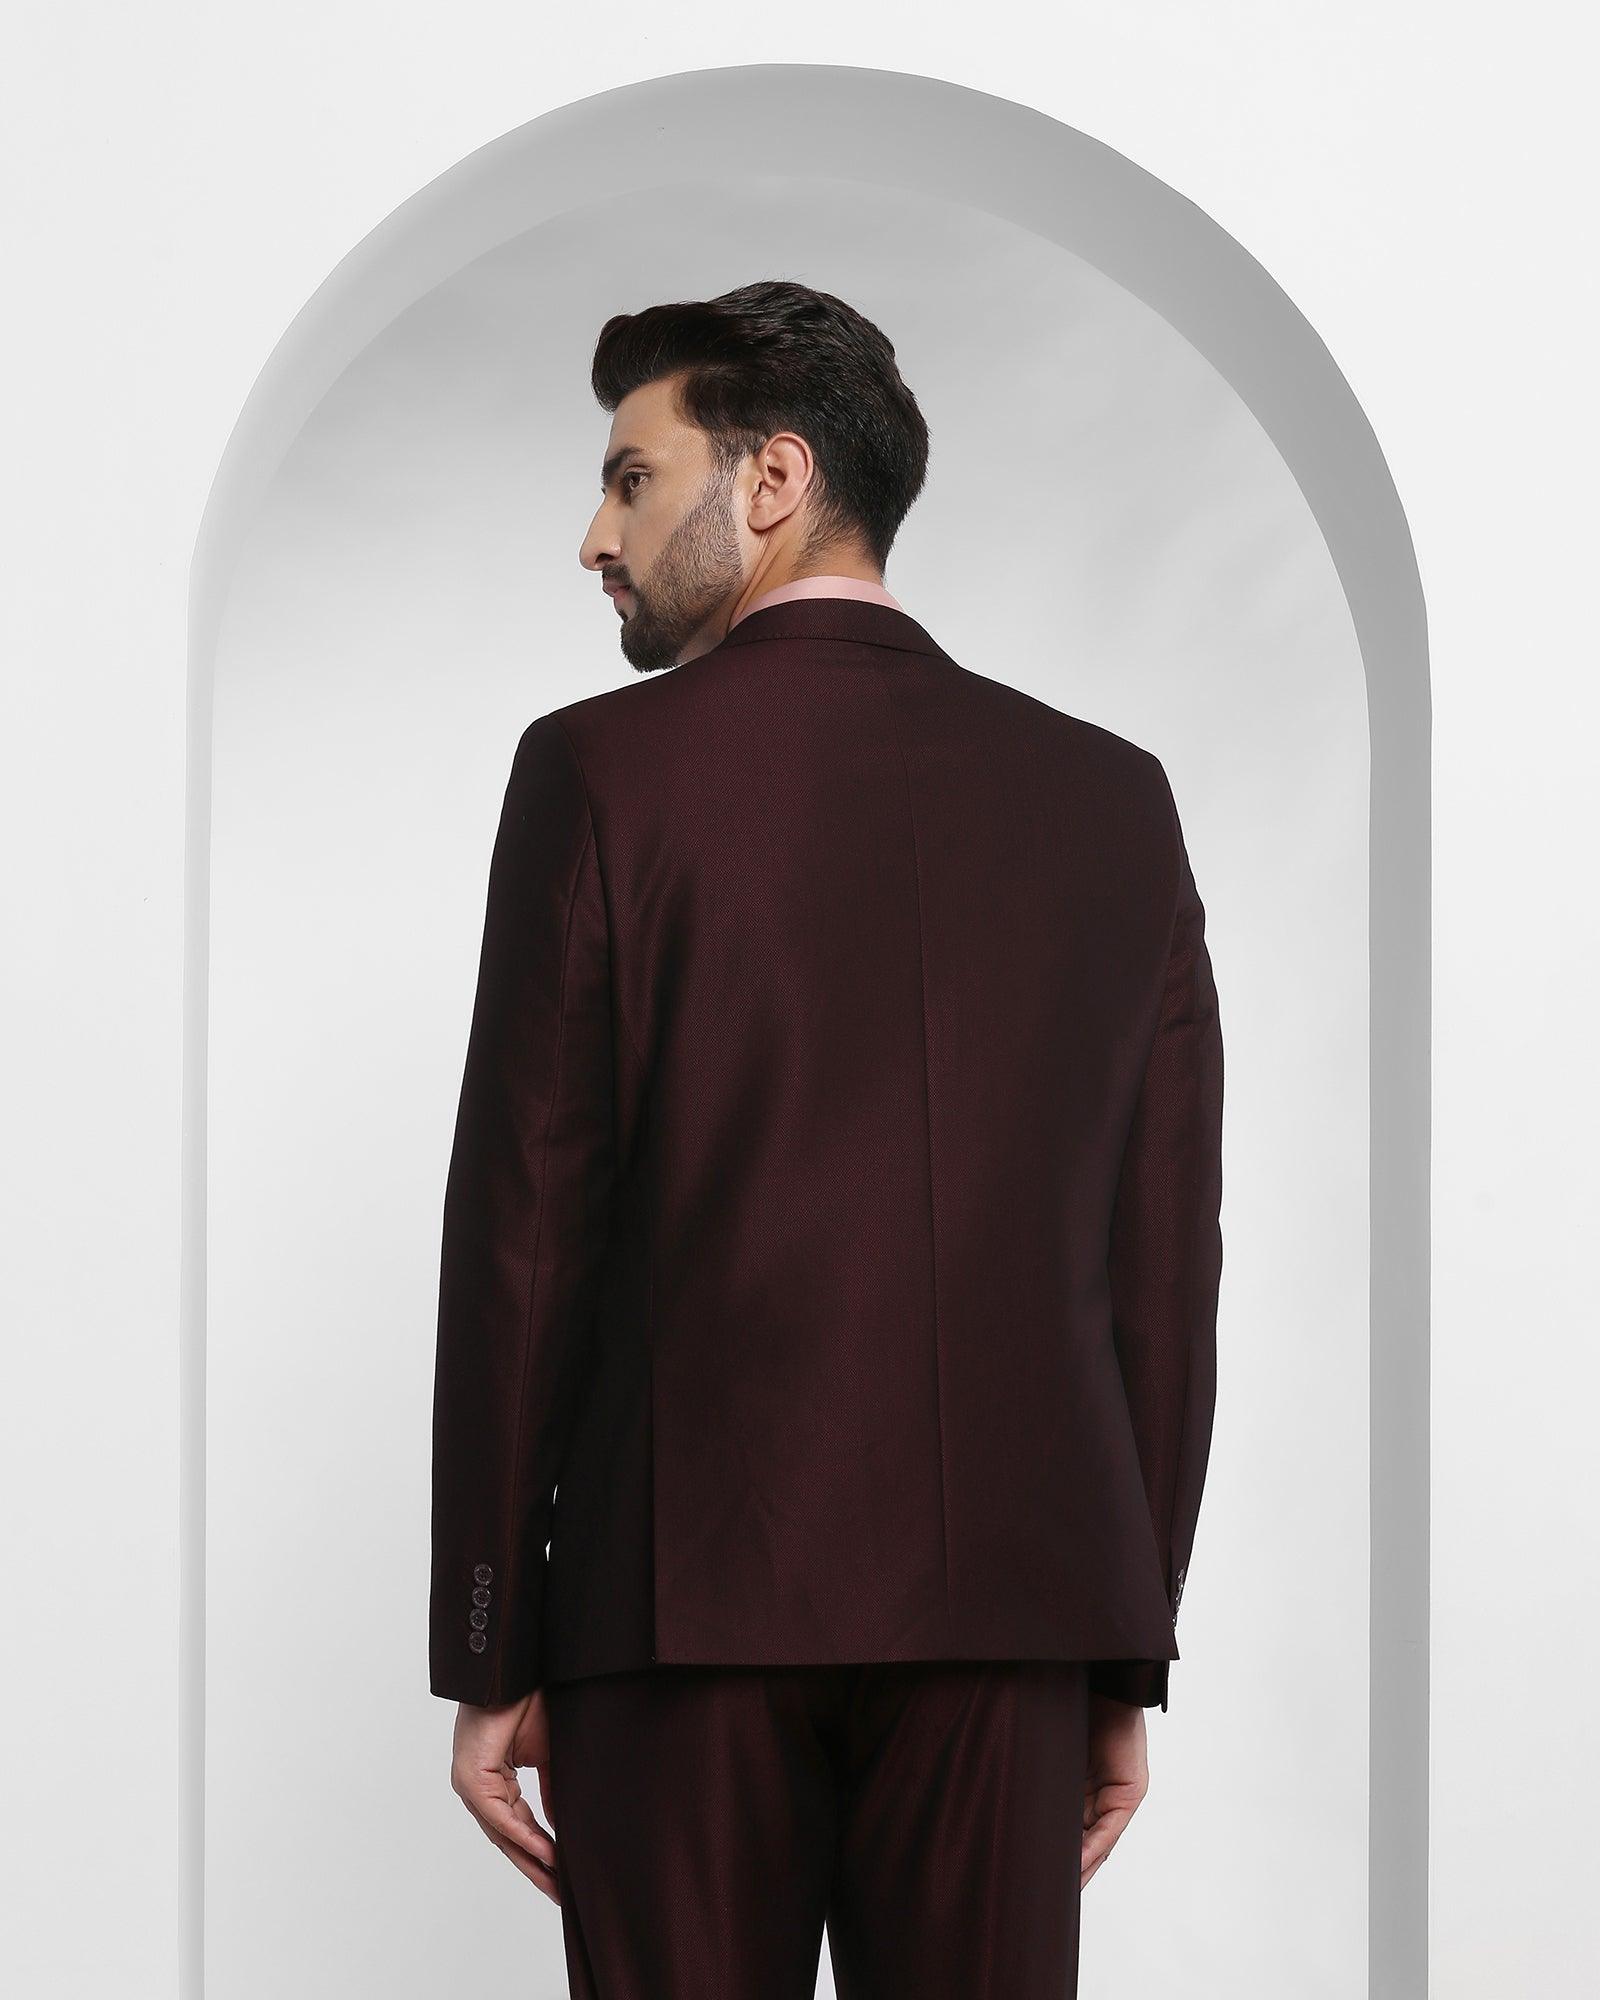 Three Piece Wine Textured Formal Suit - Bonto